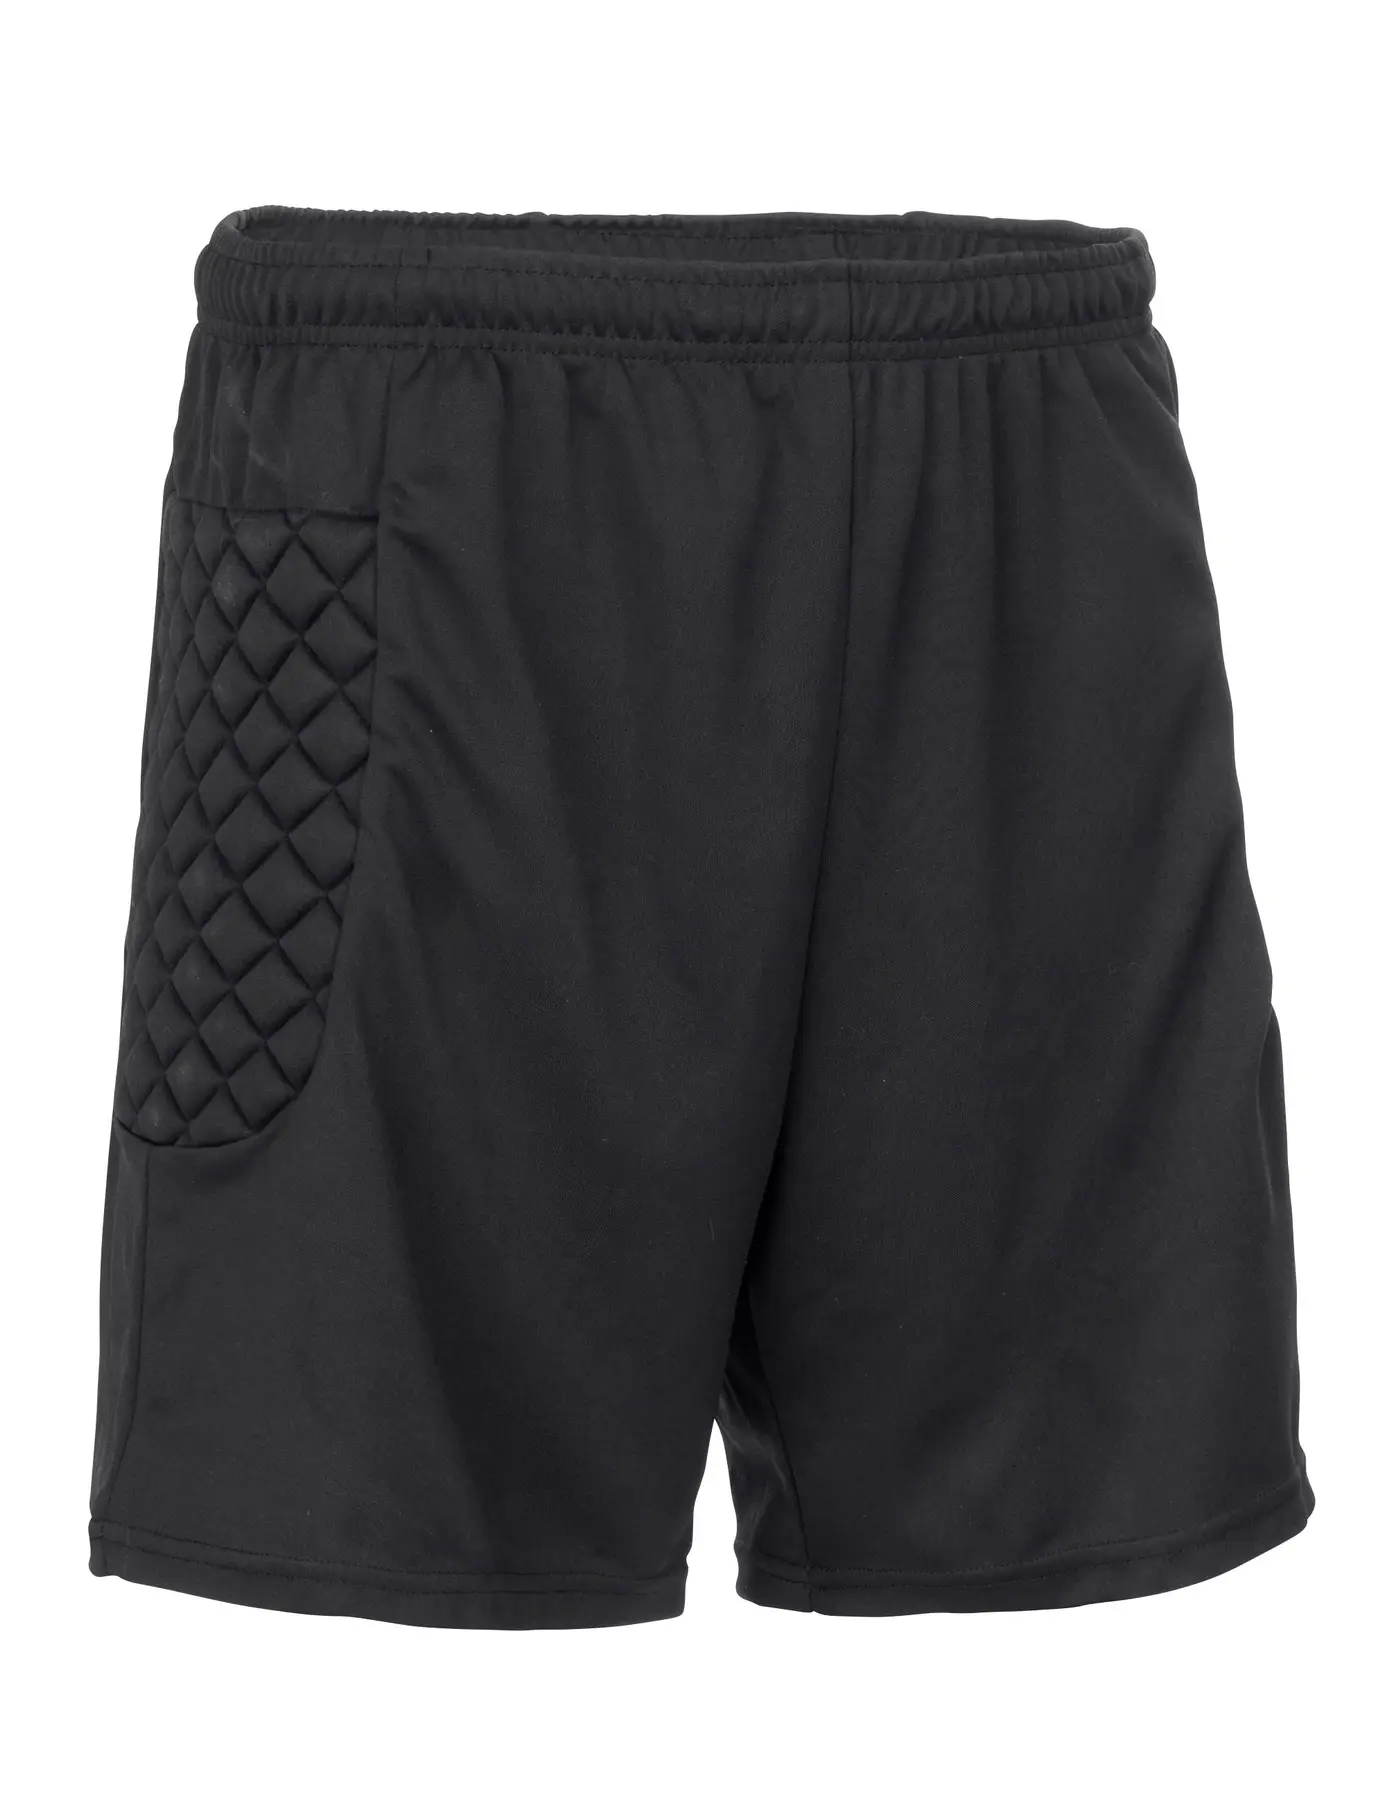 Вратарские шорты SELECT Argentina goalkeeper's shorts (010) чорний, XL